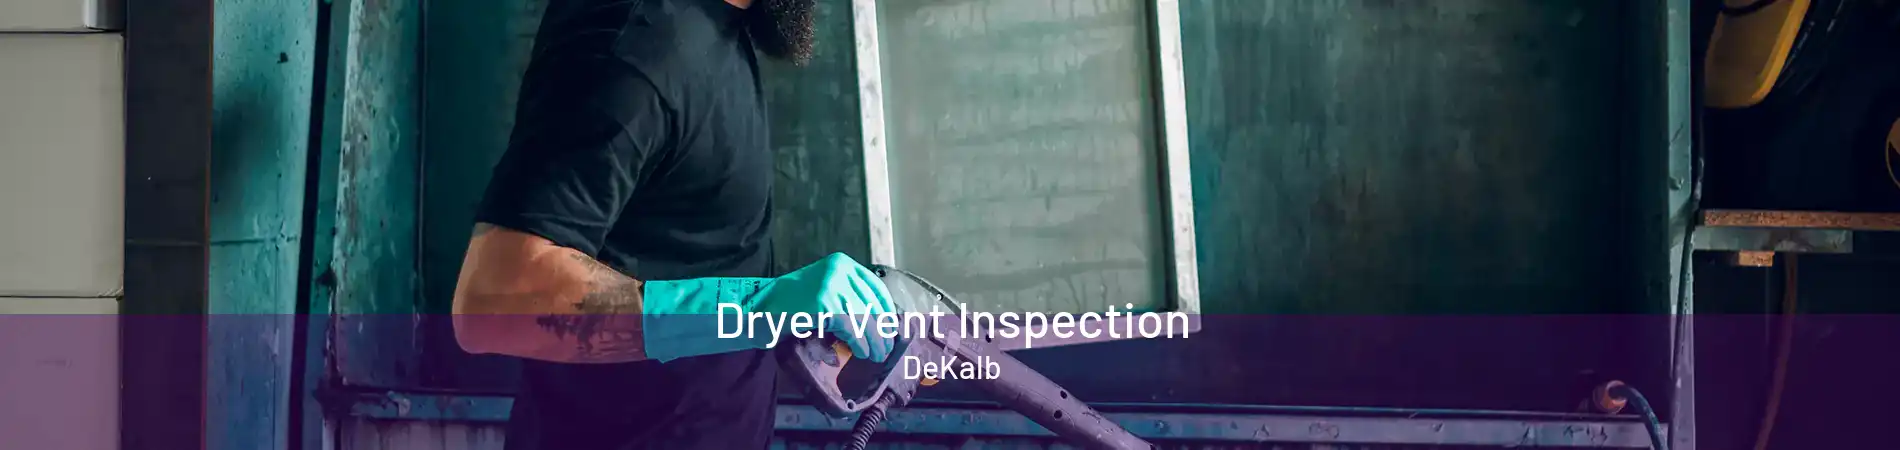 Dryer Vent Inspection DeKalb